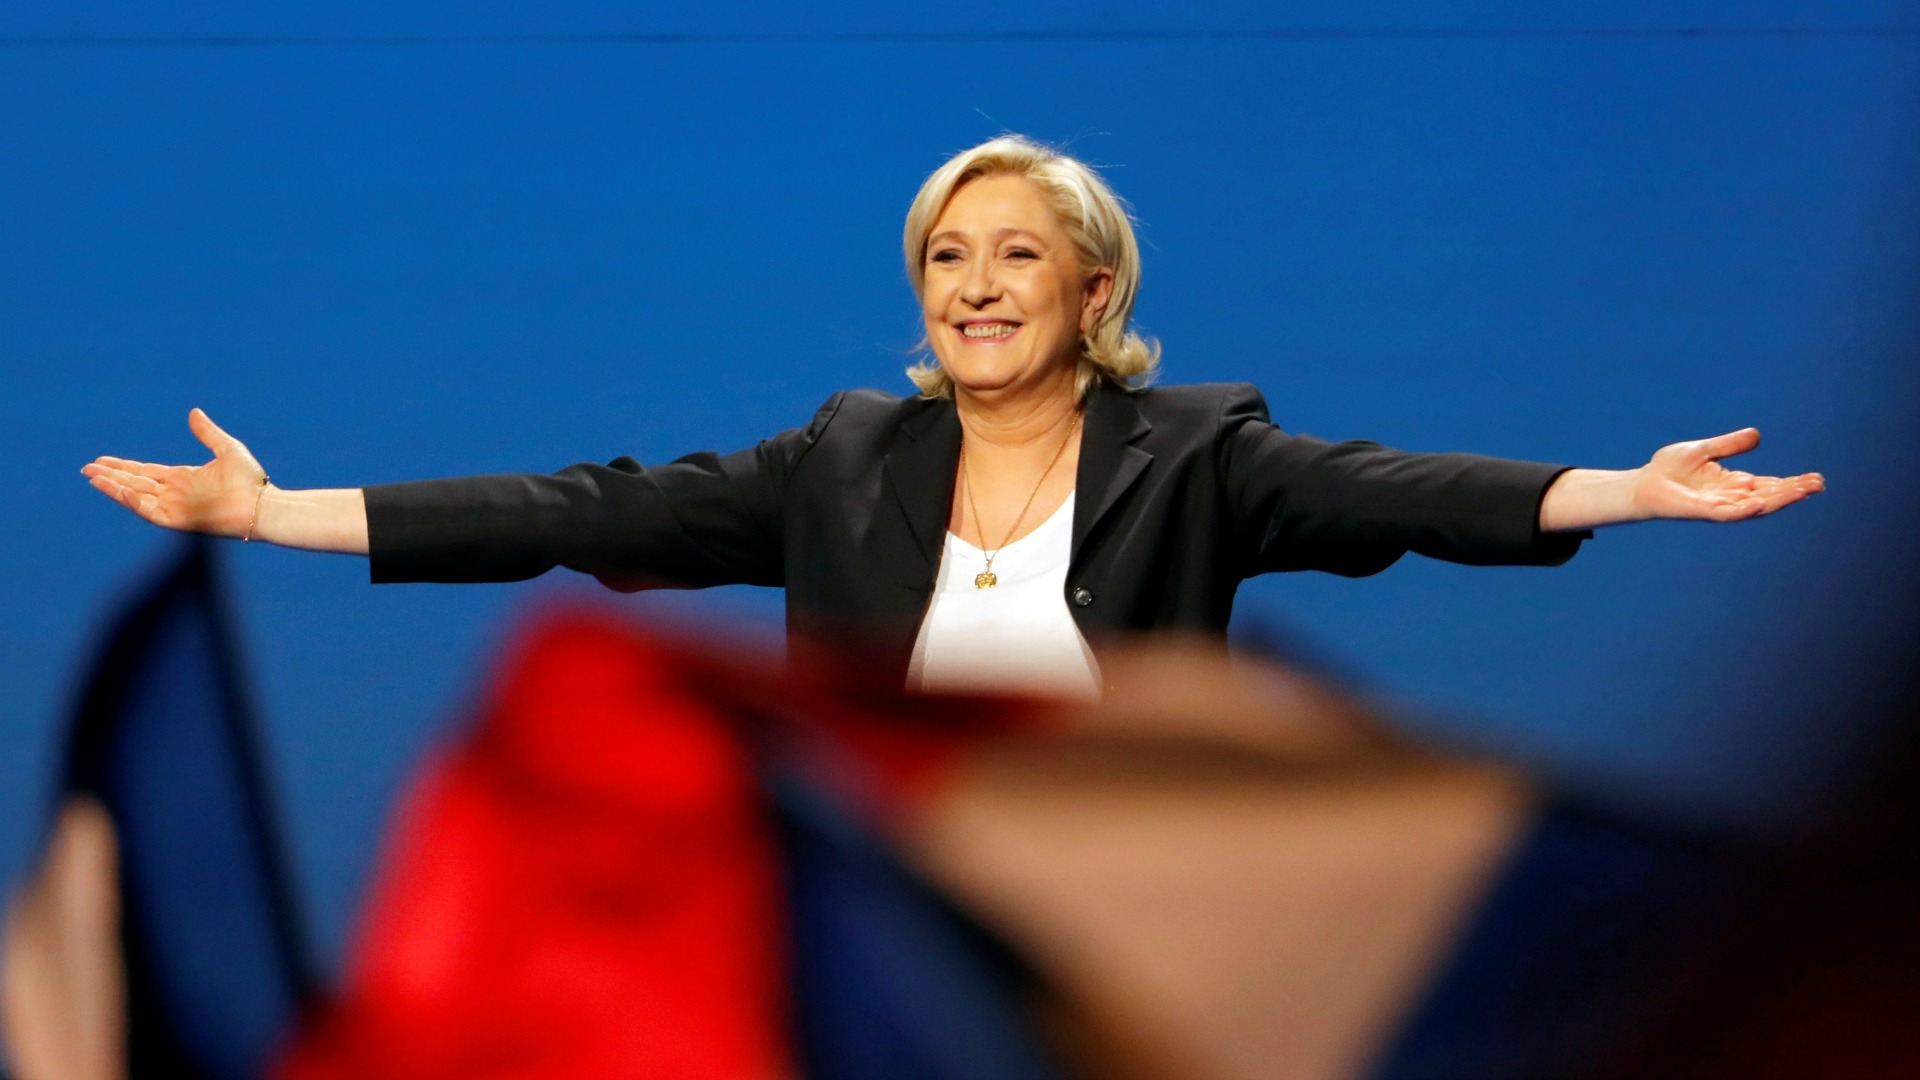 Marine Le Pen plagia parte de un discurso del conservador Fillon